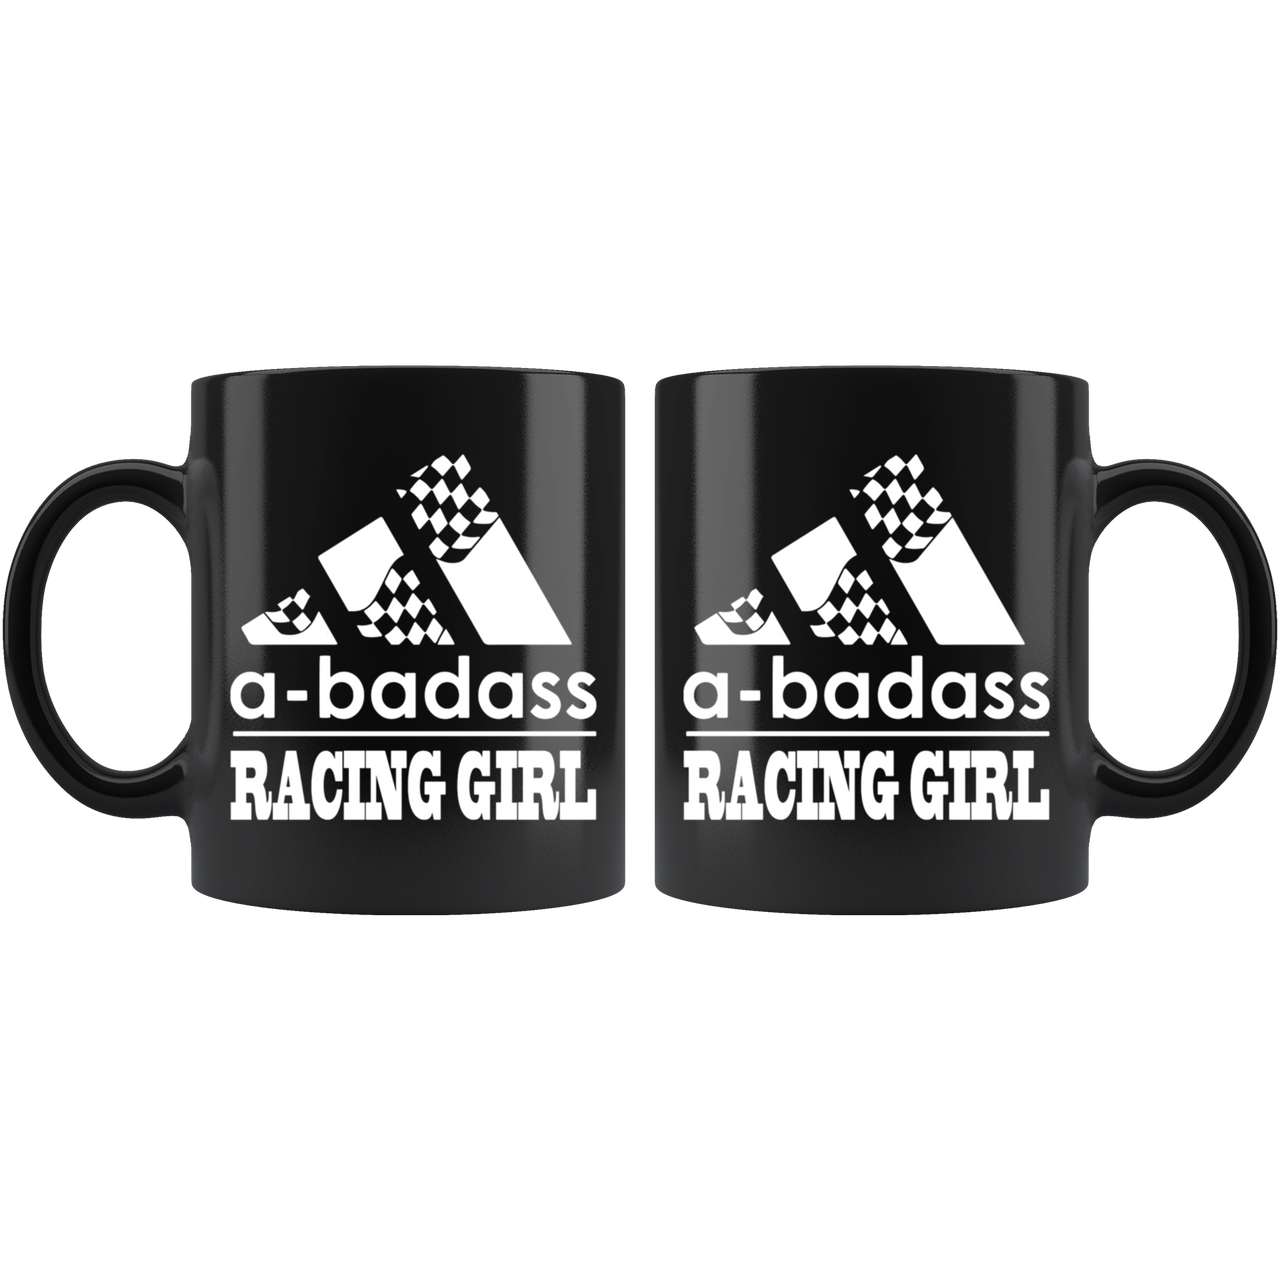 A-Badass Racing Girl Mug!